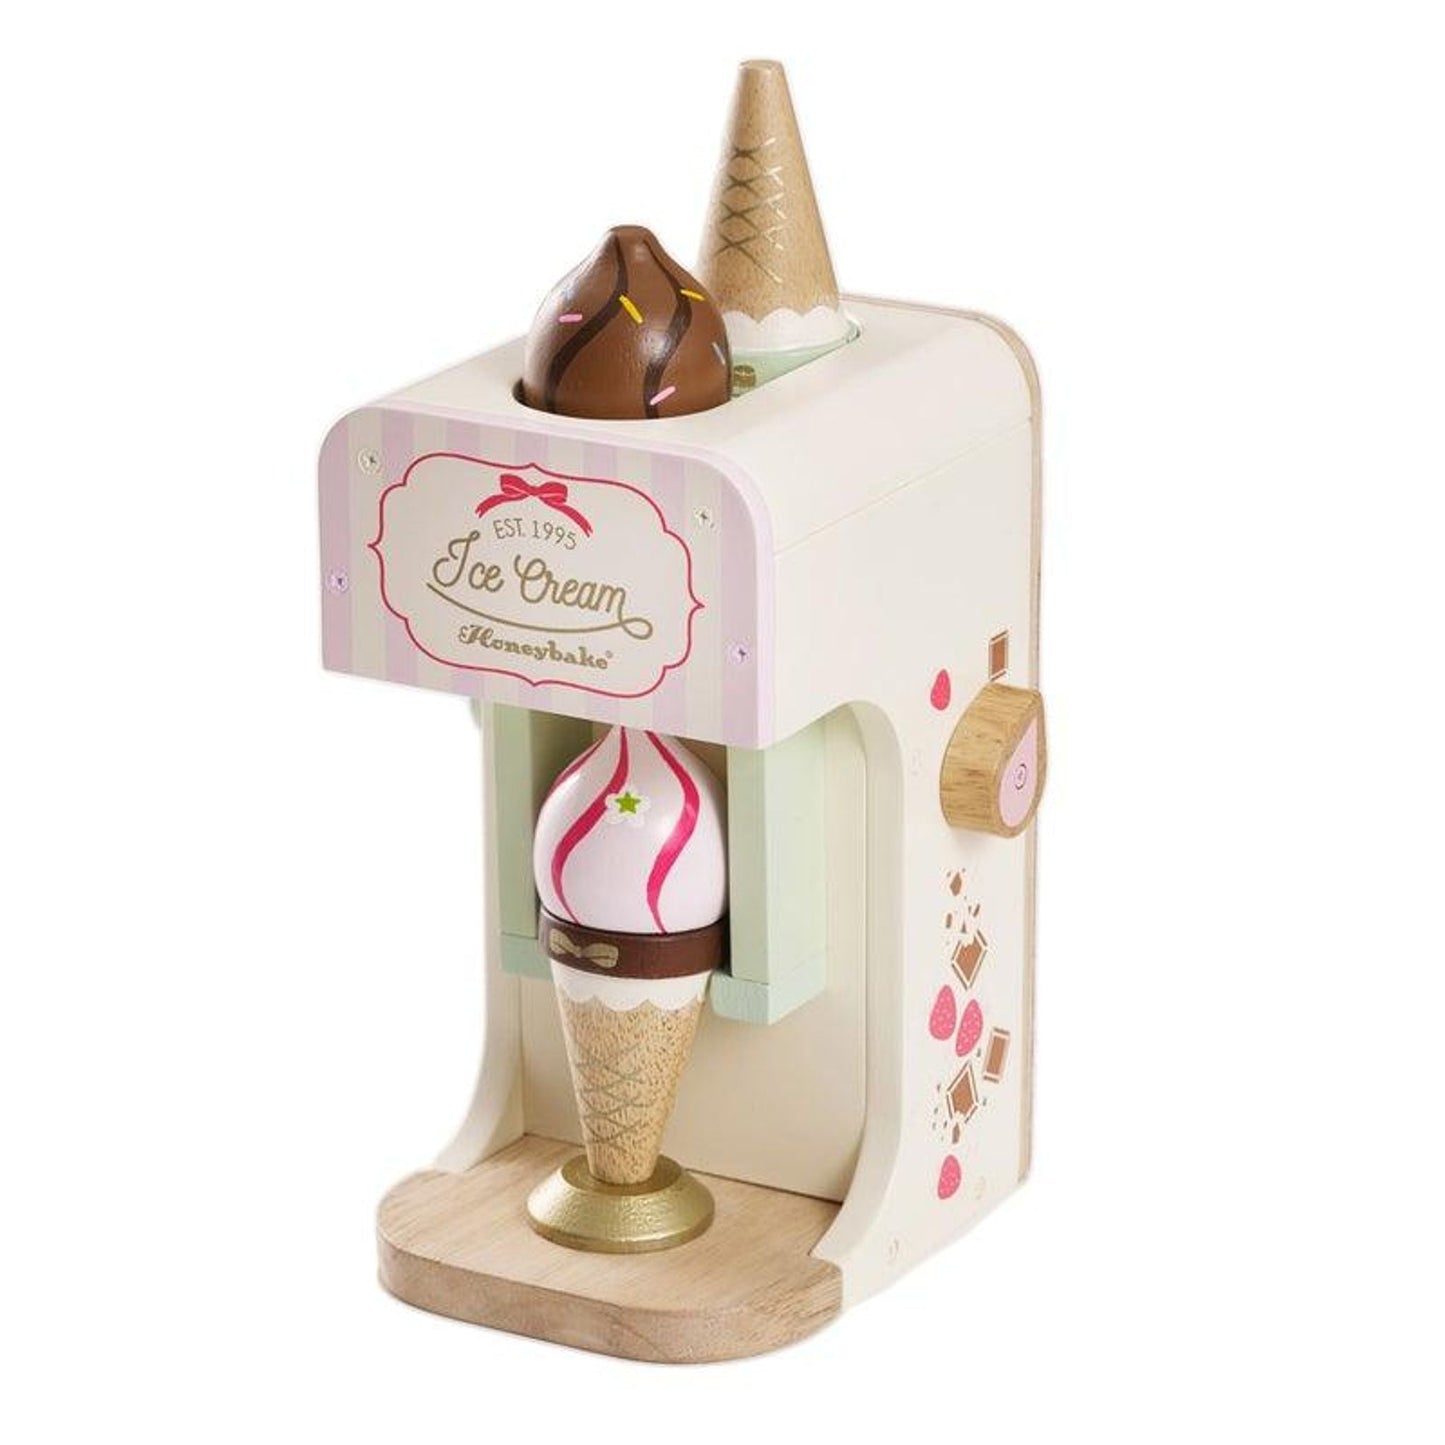 Honeybake Ice Cream Machine - Toybox Tales